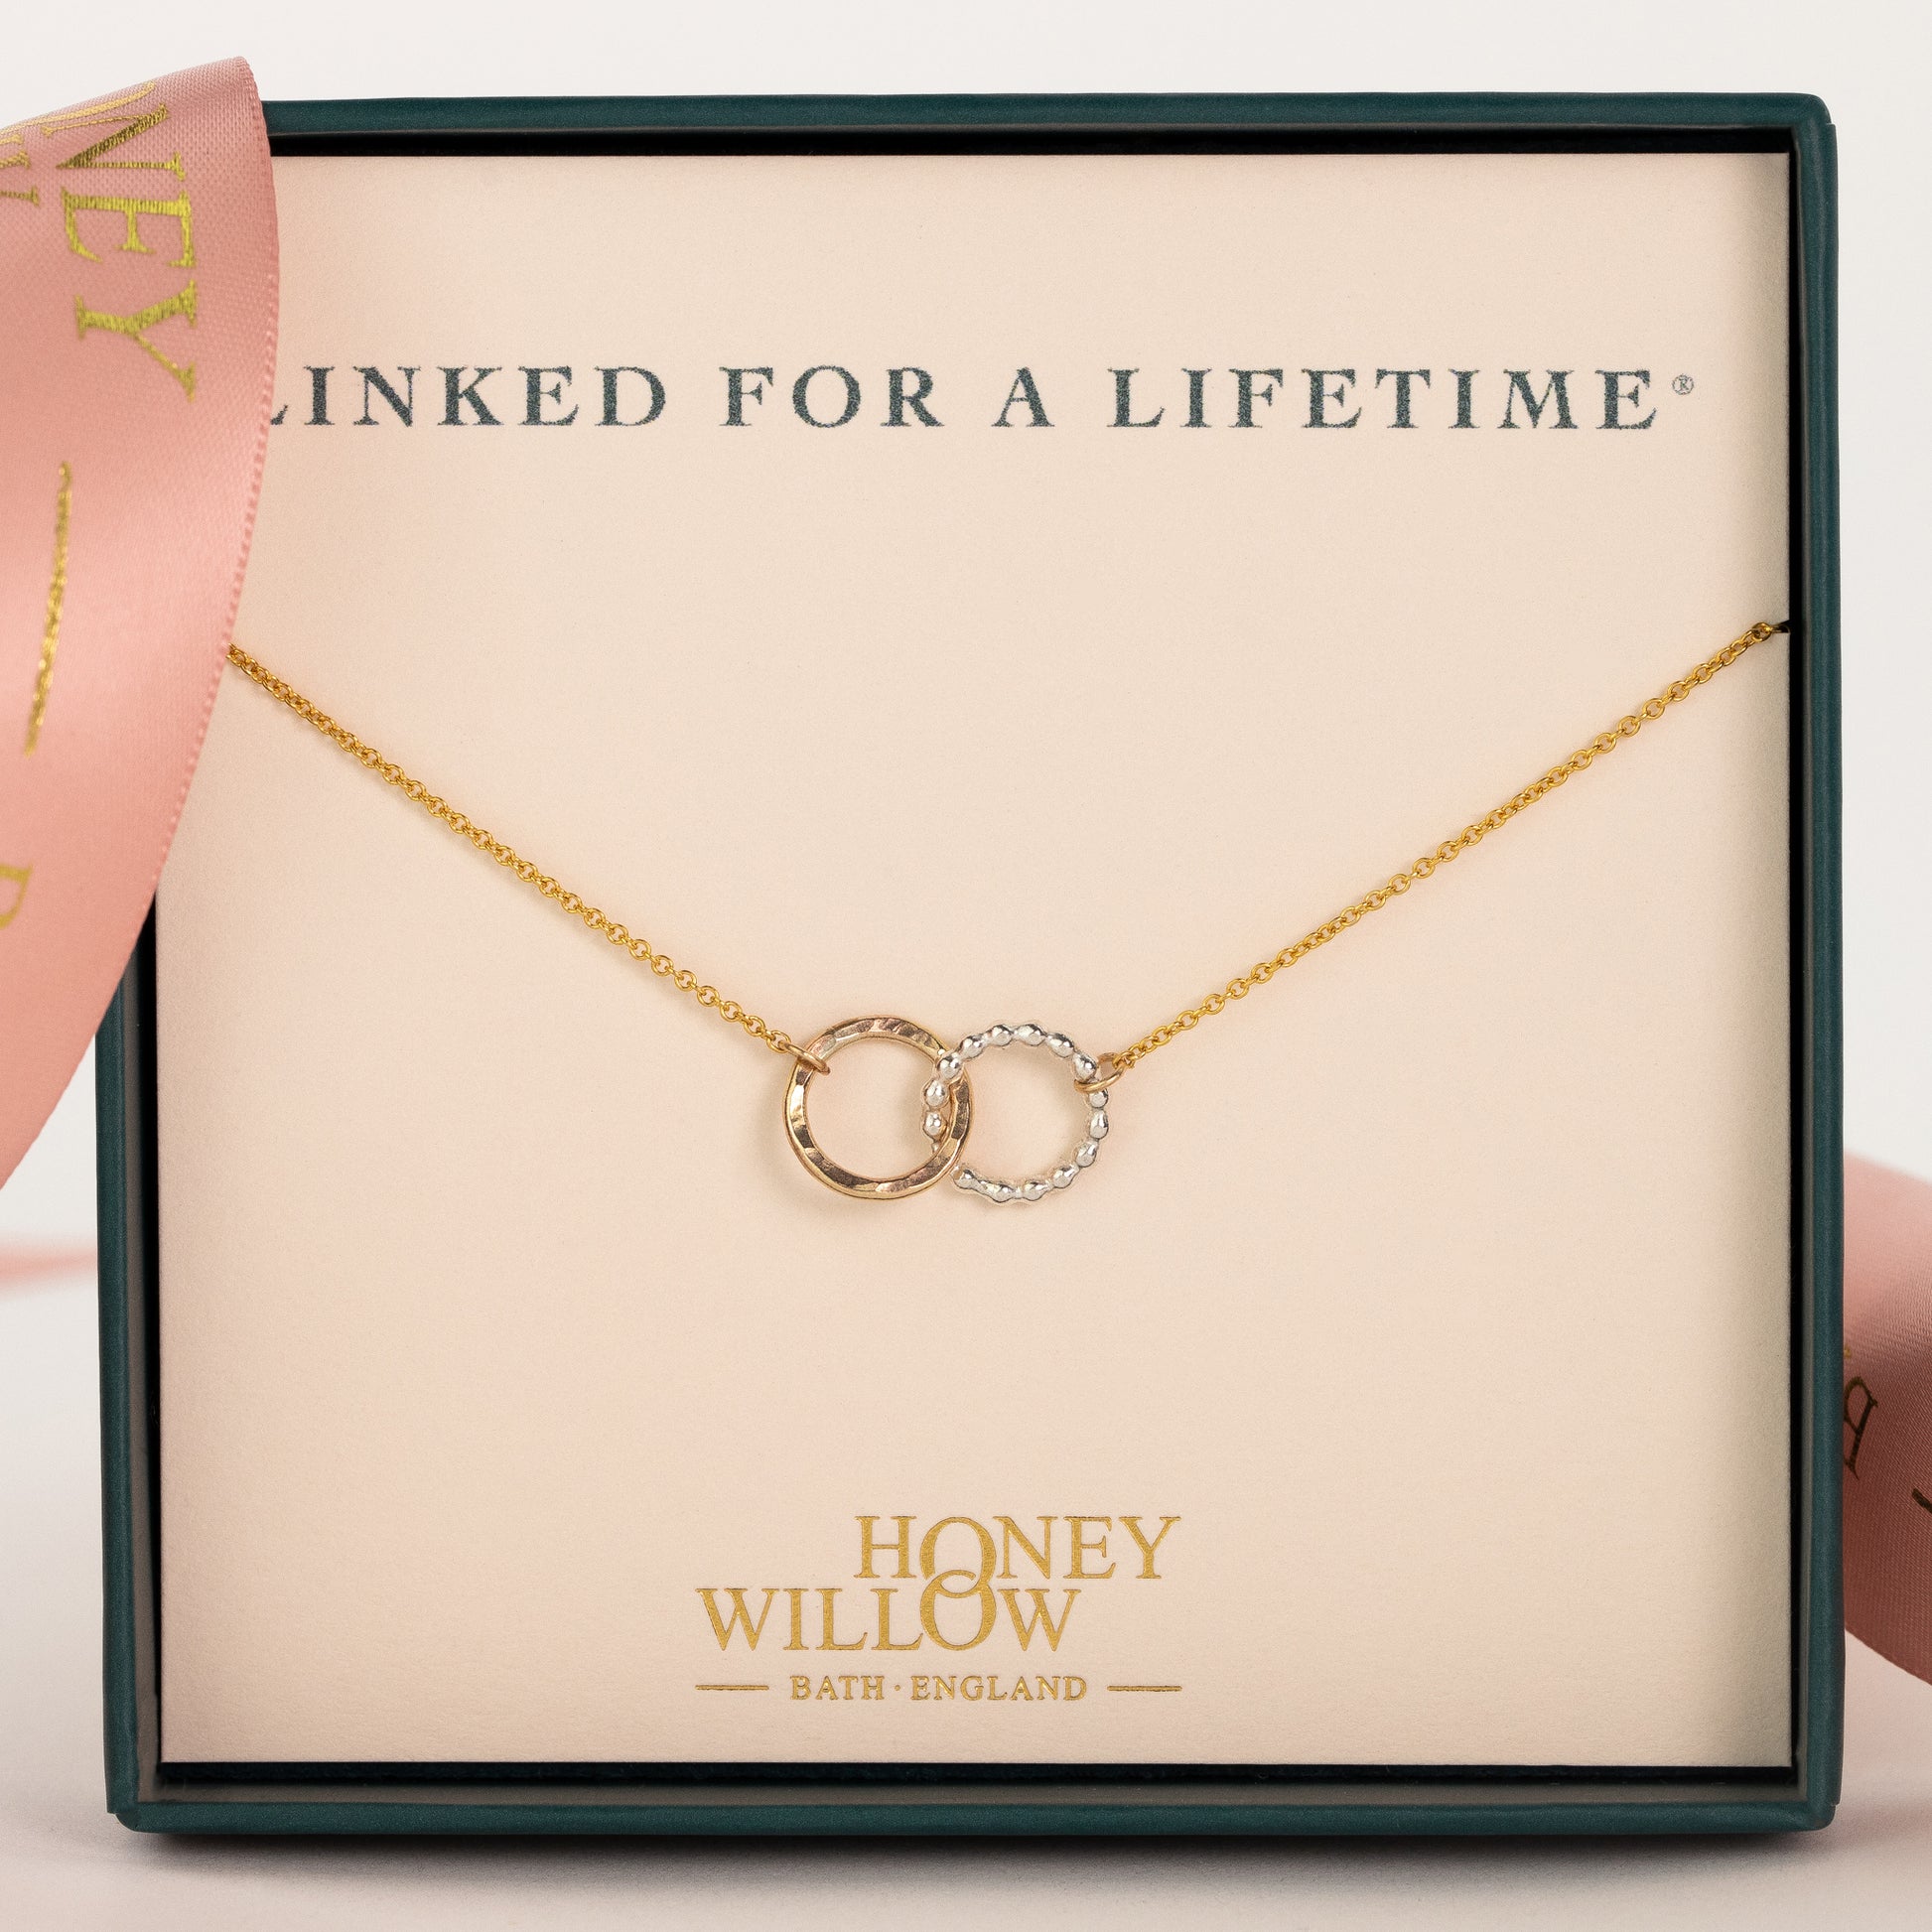 Lovelink Necklace - Linked for a Lifetime - Silver & Gold